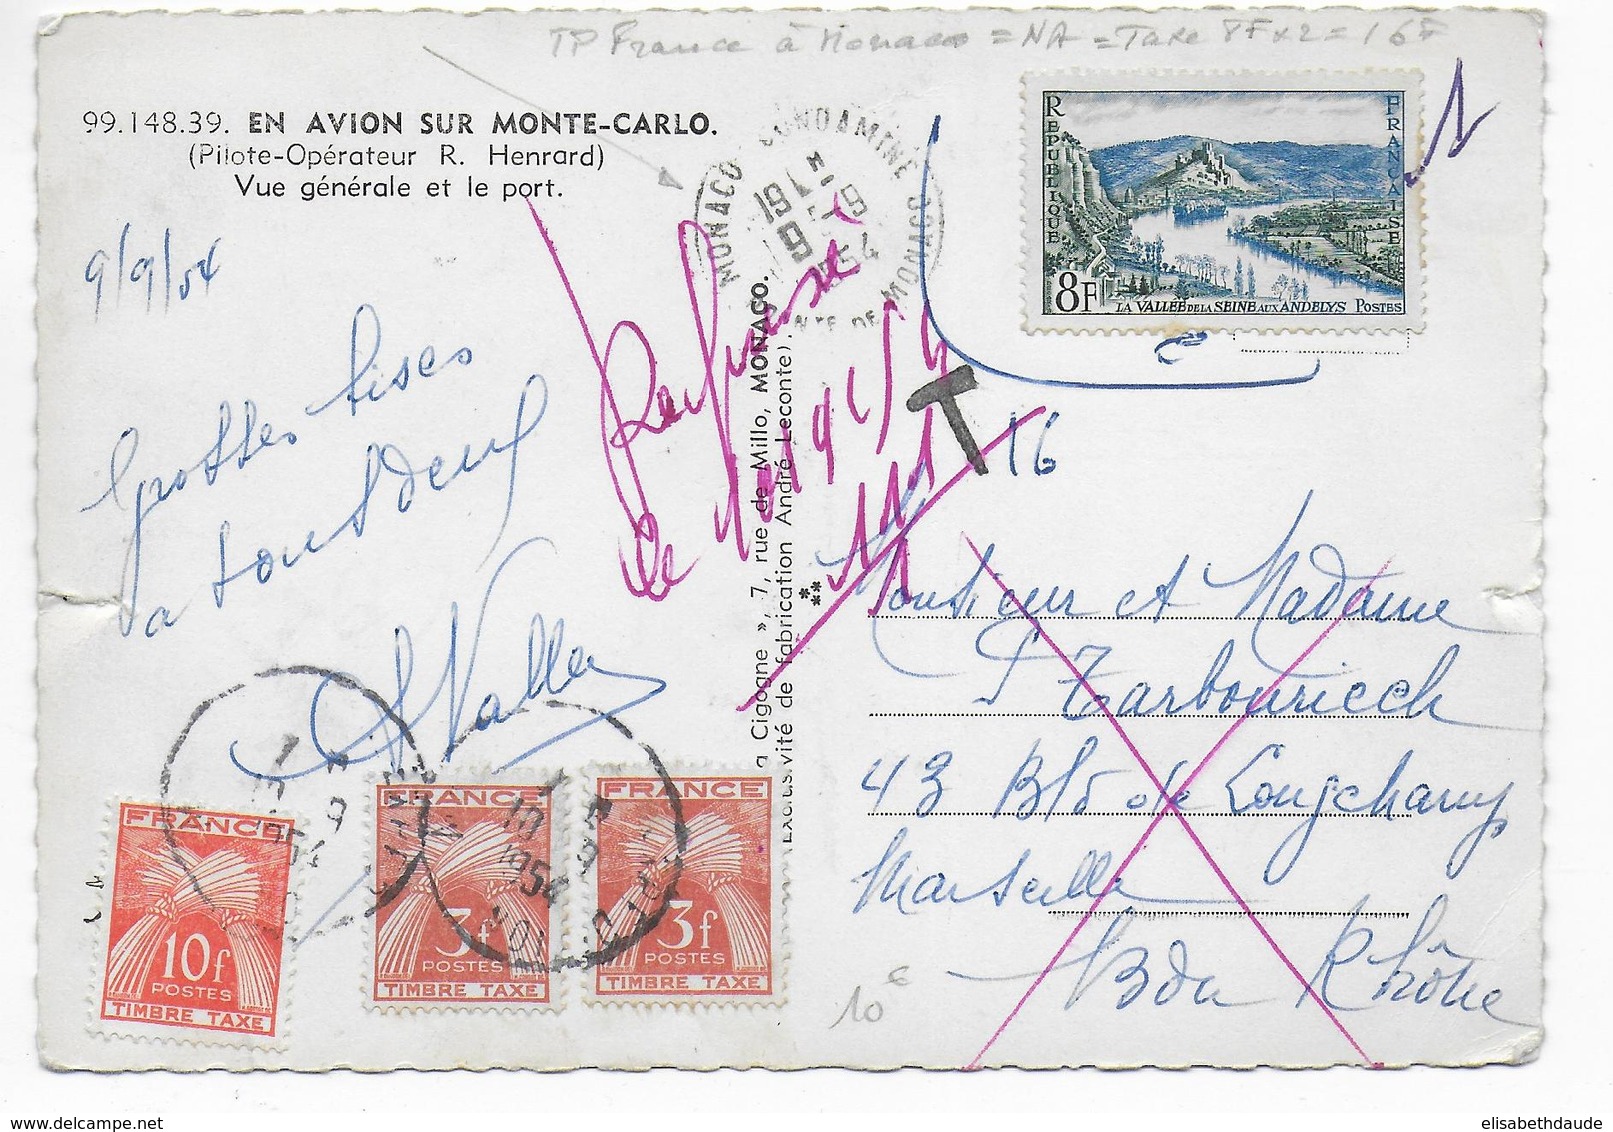 MONACO - 1954 - TIMBRE DE FRANCE NON VALIDE UTILISE à MONACO => TAXE - CP => MARSEILLE => REFUSE - Marcofilia